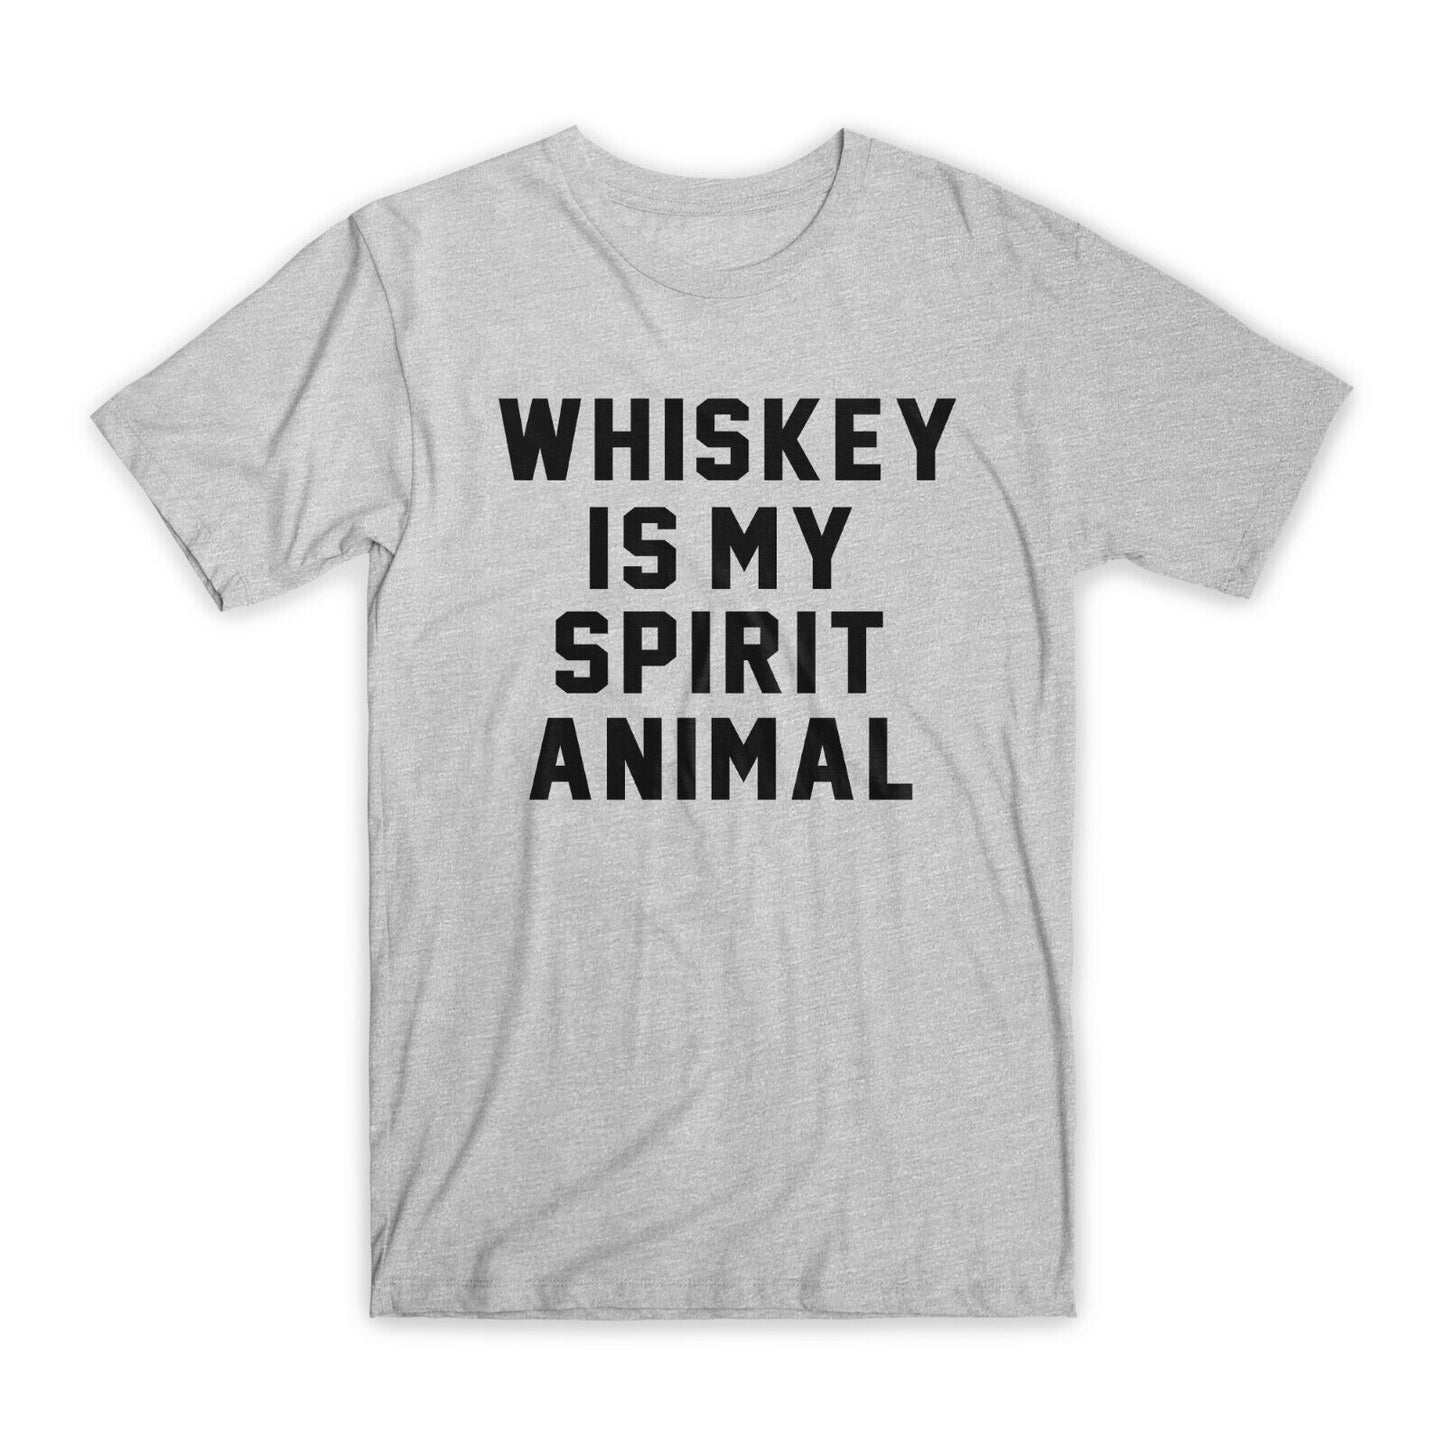 Whiskey is My Spirit Animal T-Shirt Premium Cotton Crew Neck Funny Tees Gift NEW